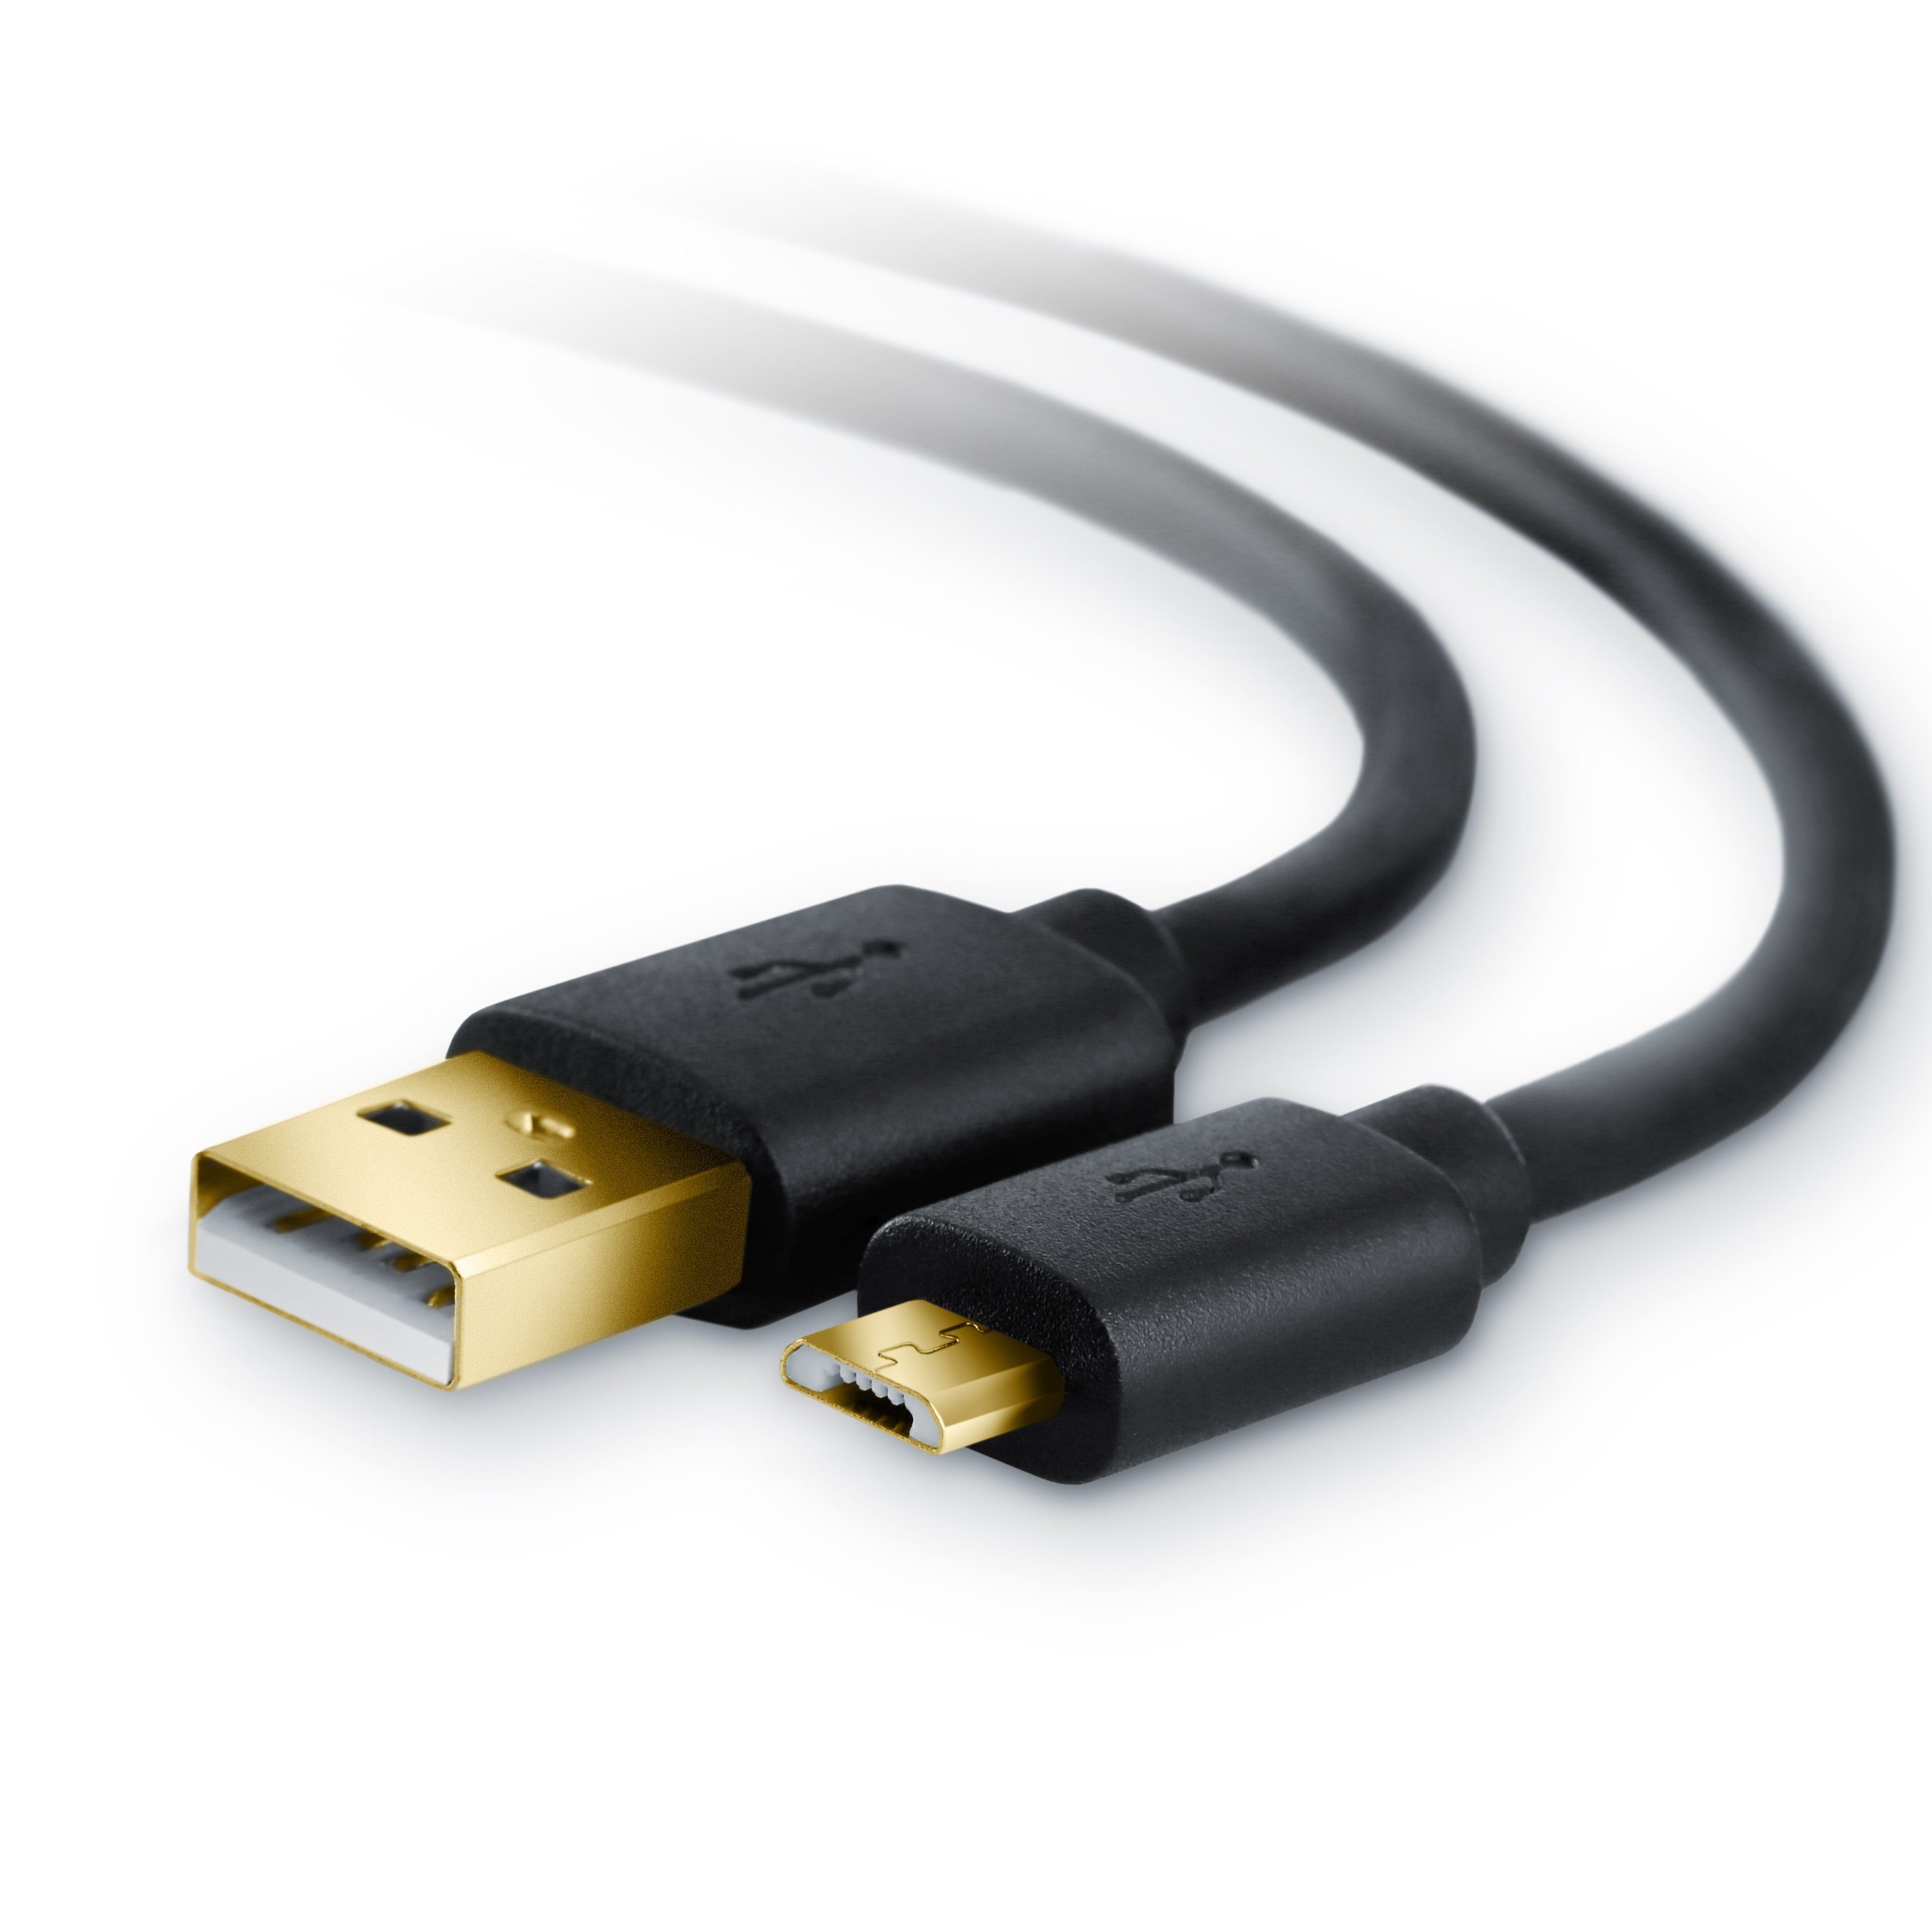 CSL USB-Kabel, 2.0, Micro-USB, USB Typ A (200 cm), High Speed MicroUSB  Ladedakel & Datenkabel - 2m